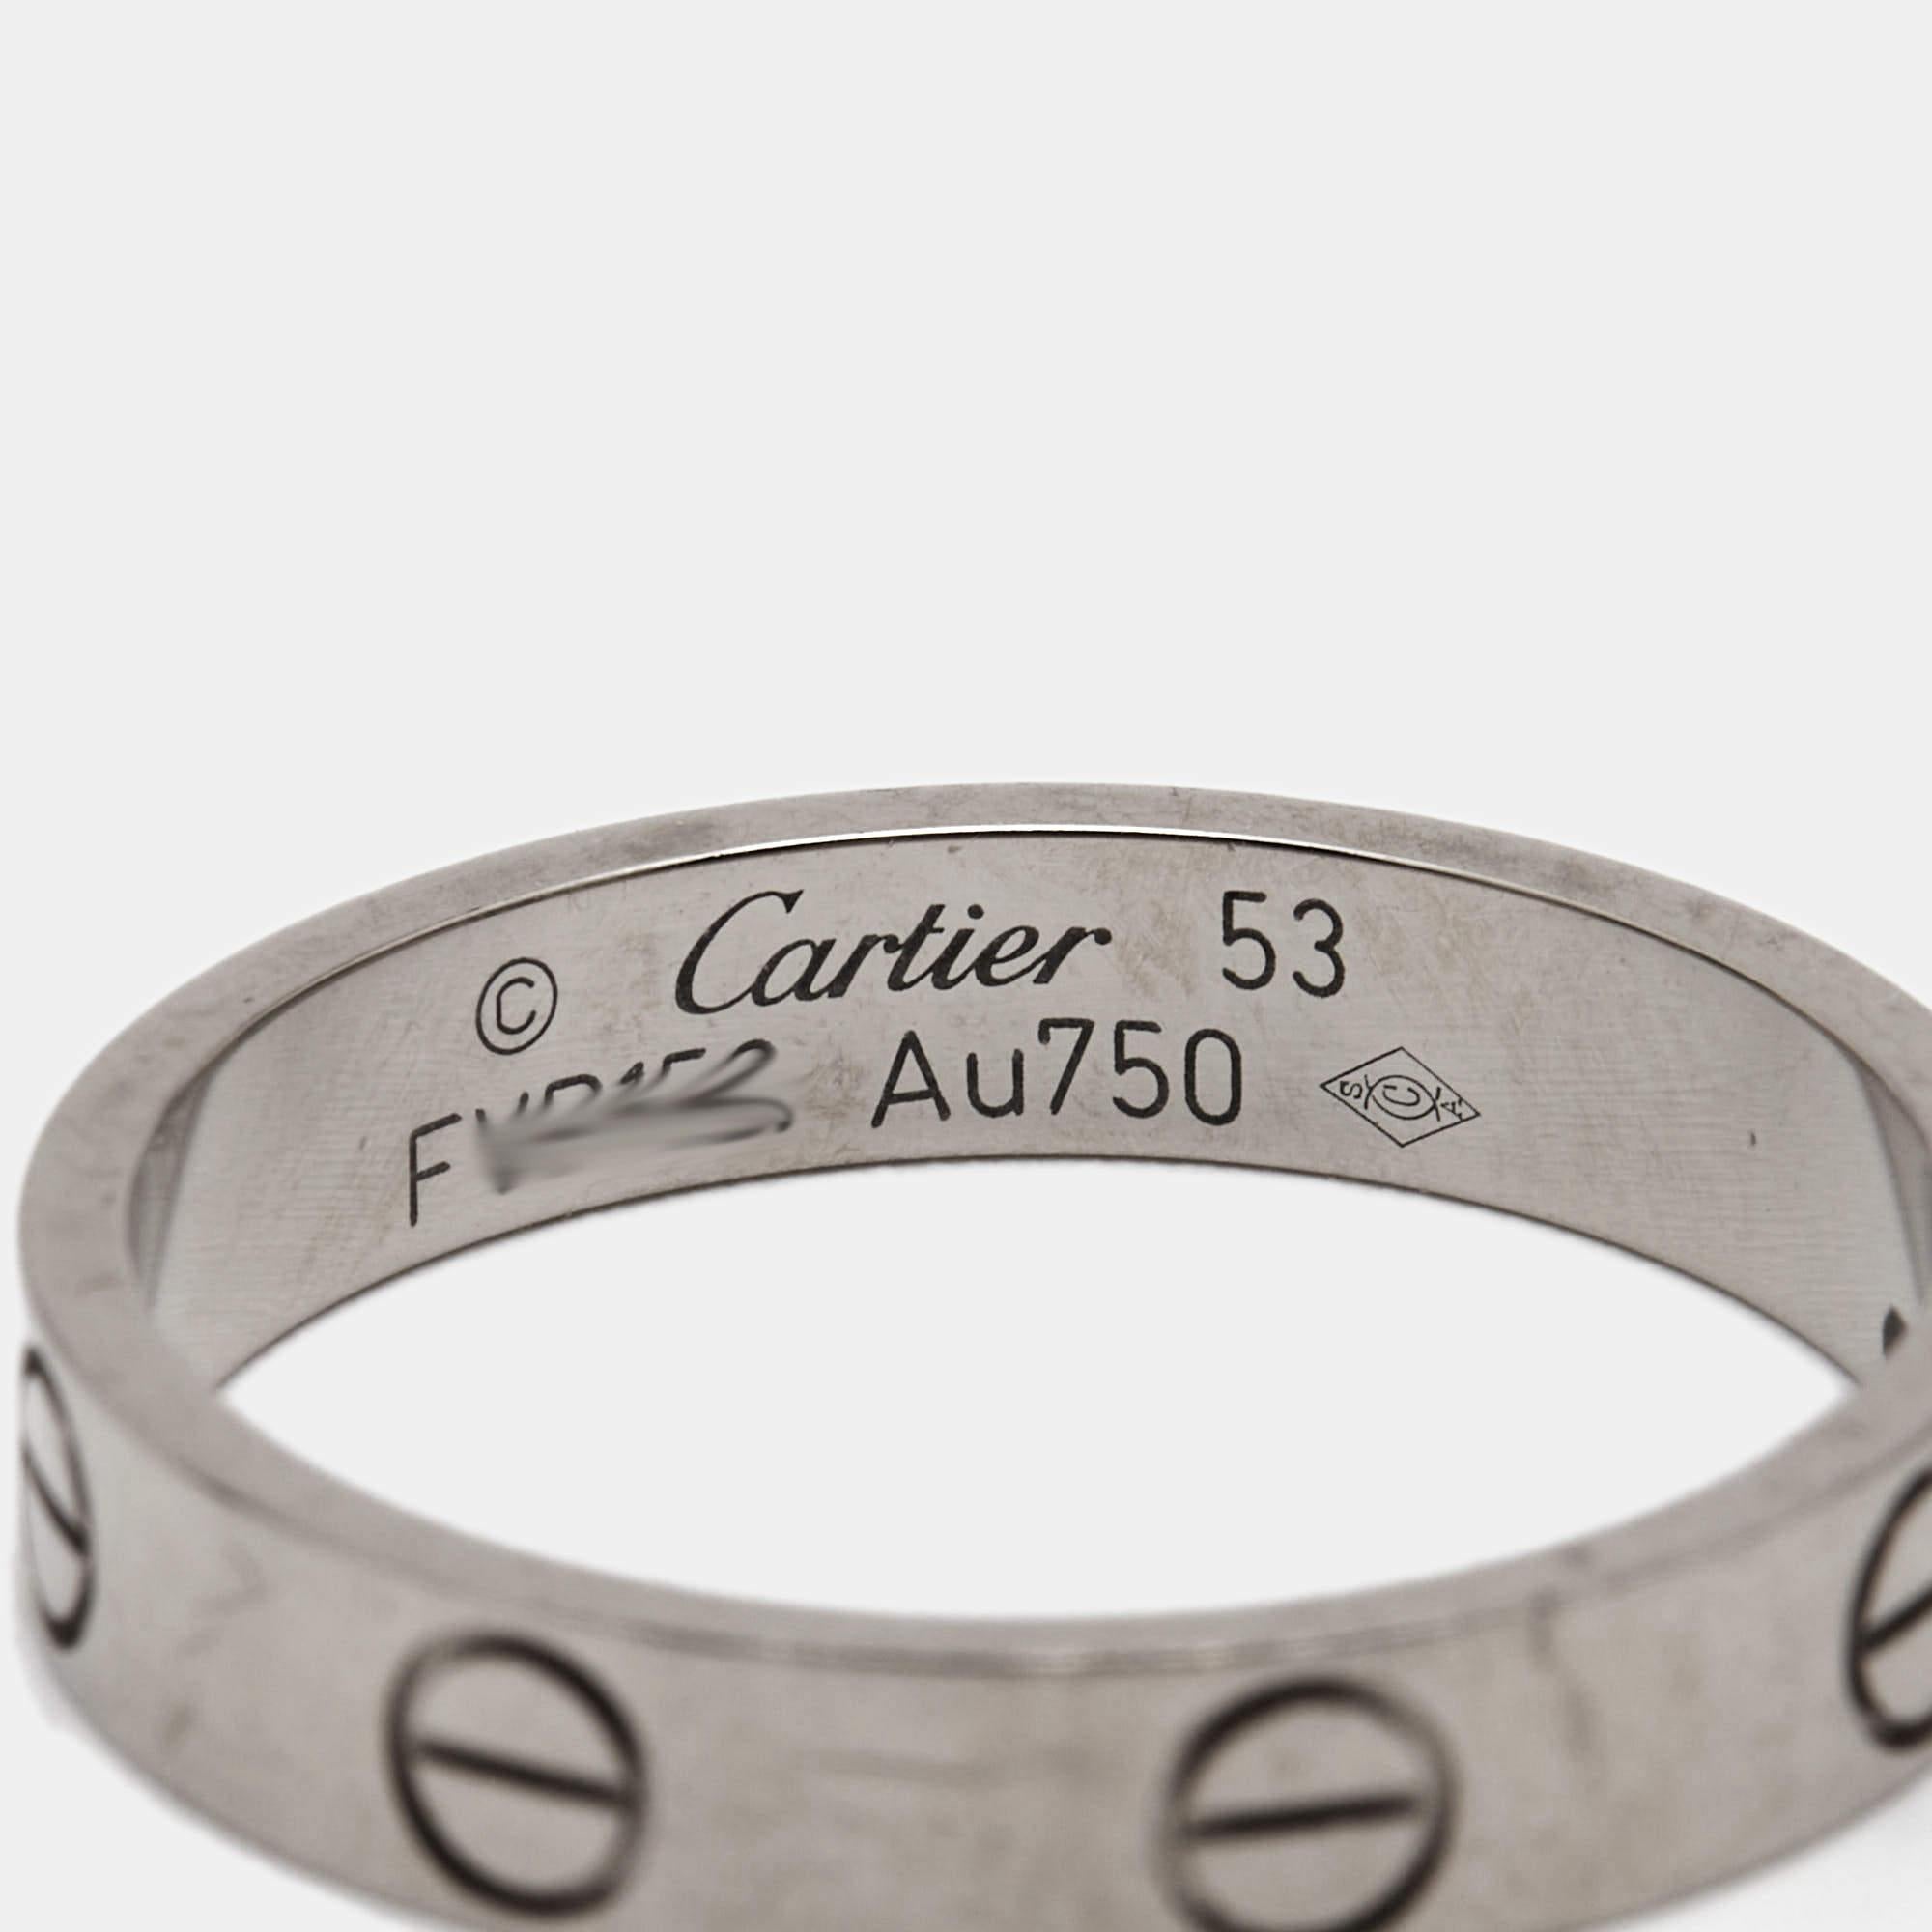 Cartier Love 18K White Gold Narrow Wedding Band Ring Size 53 In Fair Condition For Sale In Dubai, Al Qouz 2